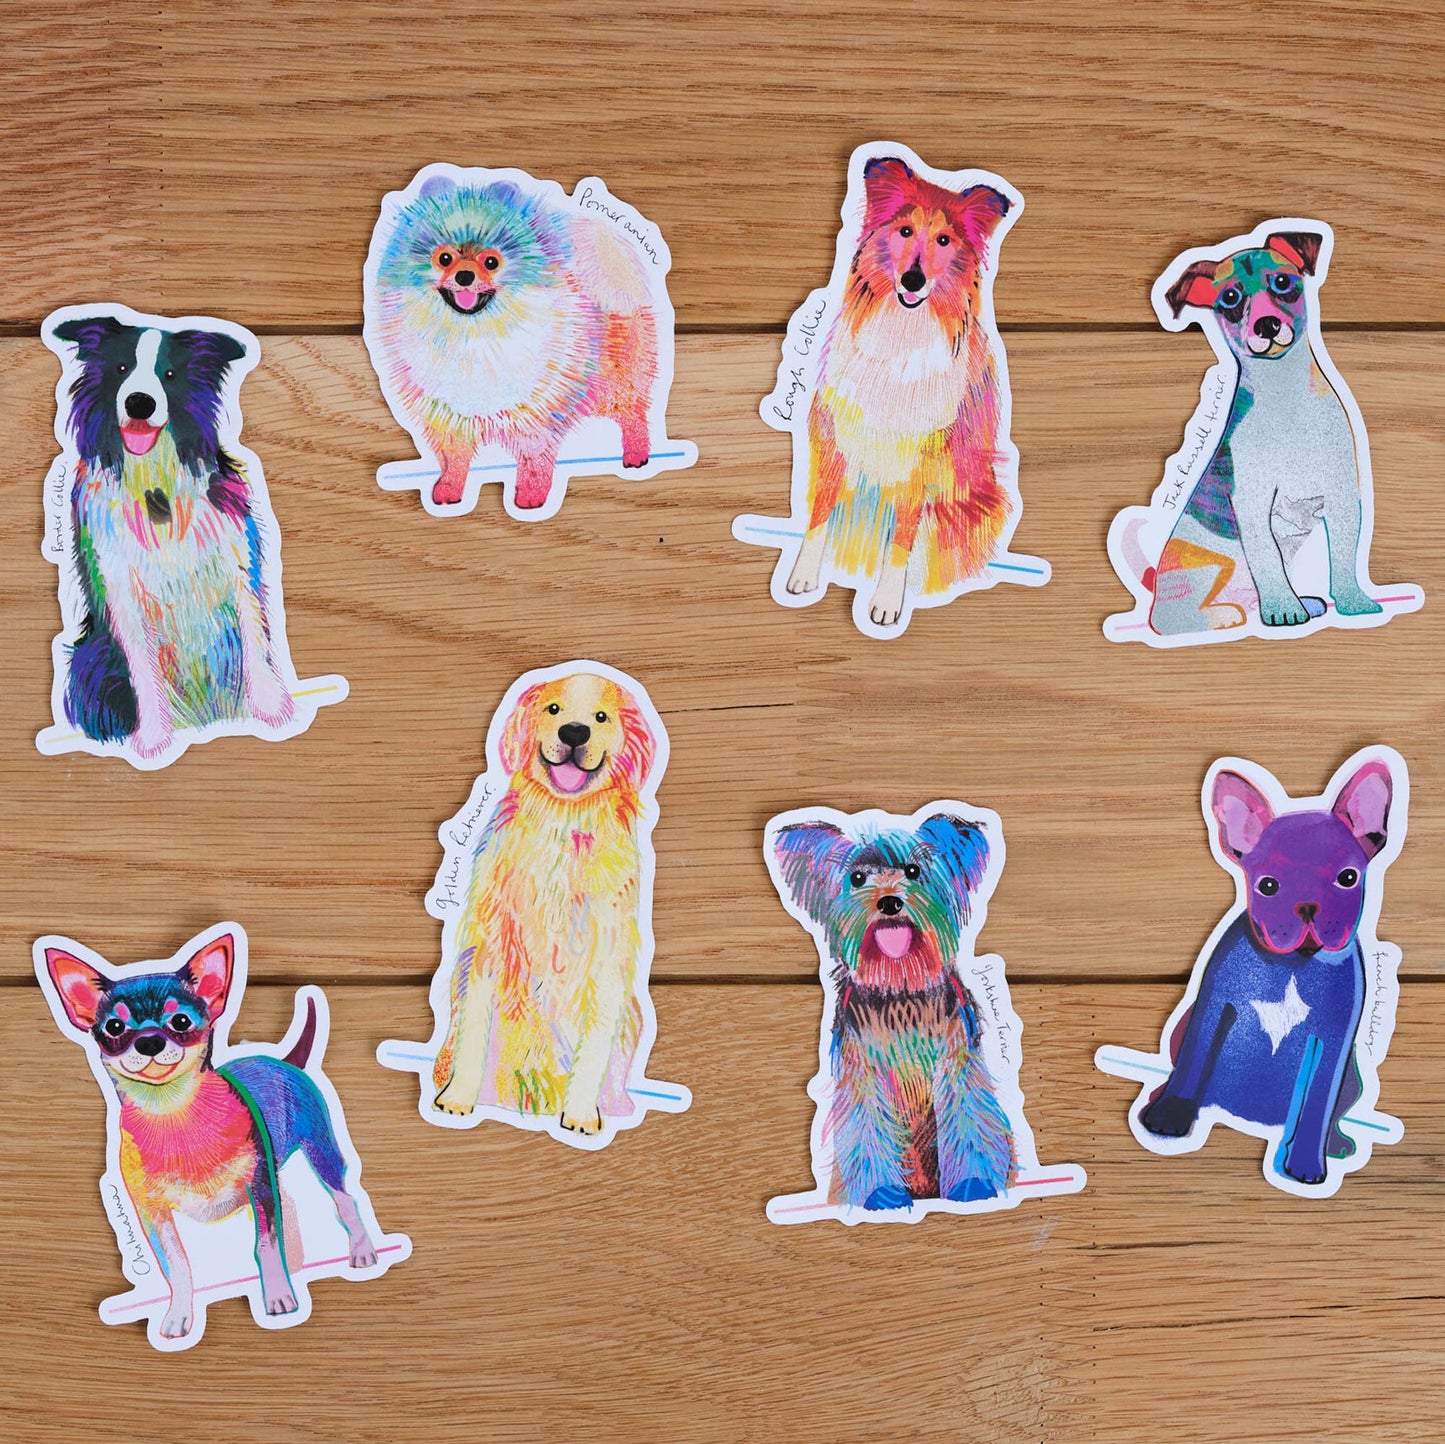 Poodle Dog Sticker, I DREW DOGS, Dog Stickers, Dog Gifts